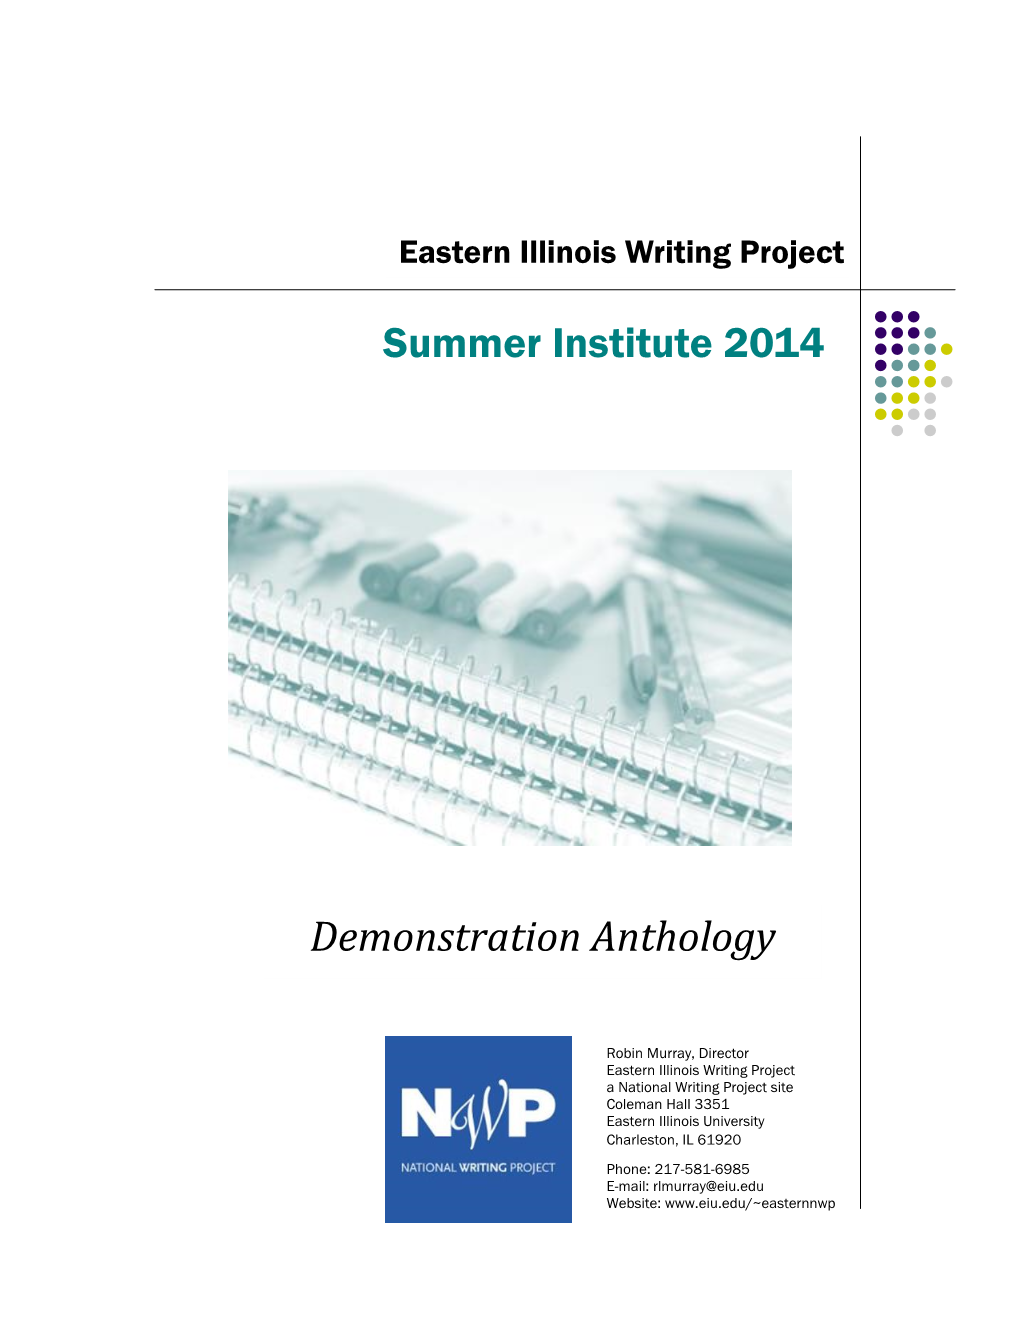 Summer Institute 2014 Demonstration Anthology